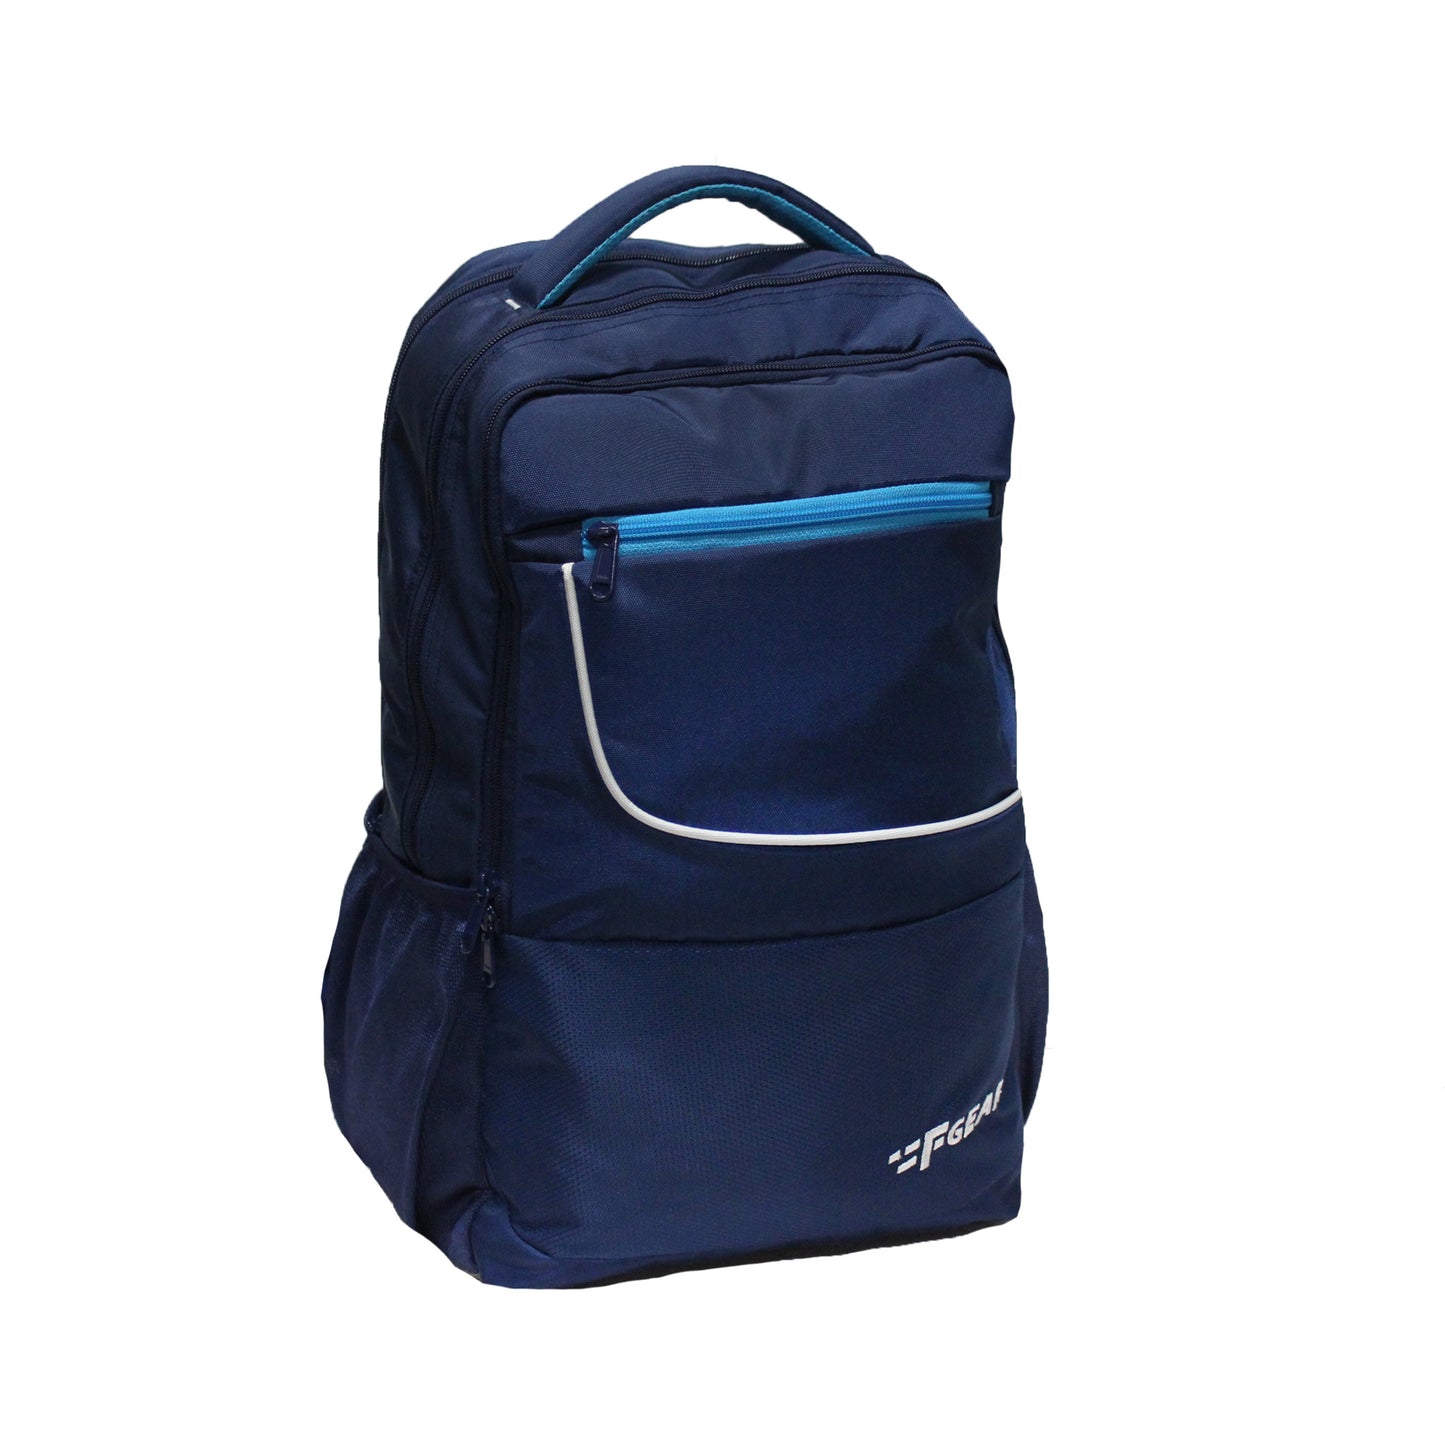 Erangel 24L Navy Laptop Backpack